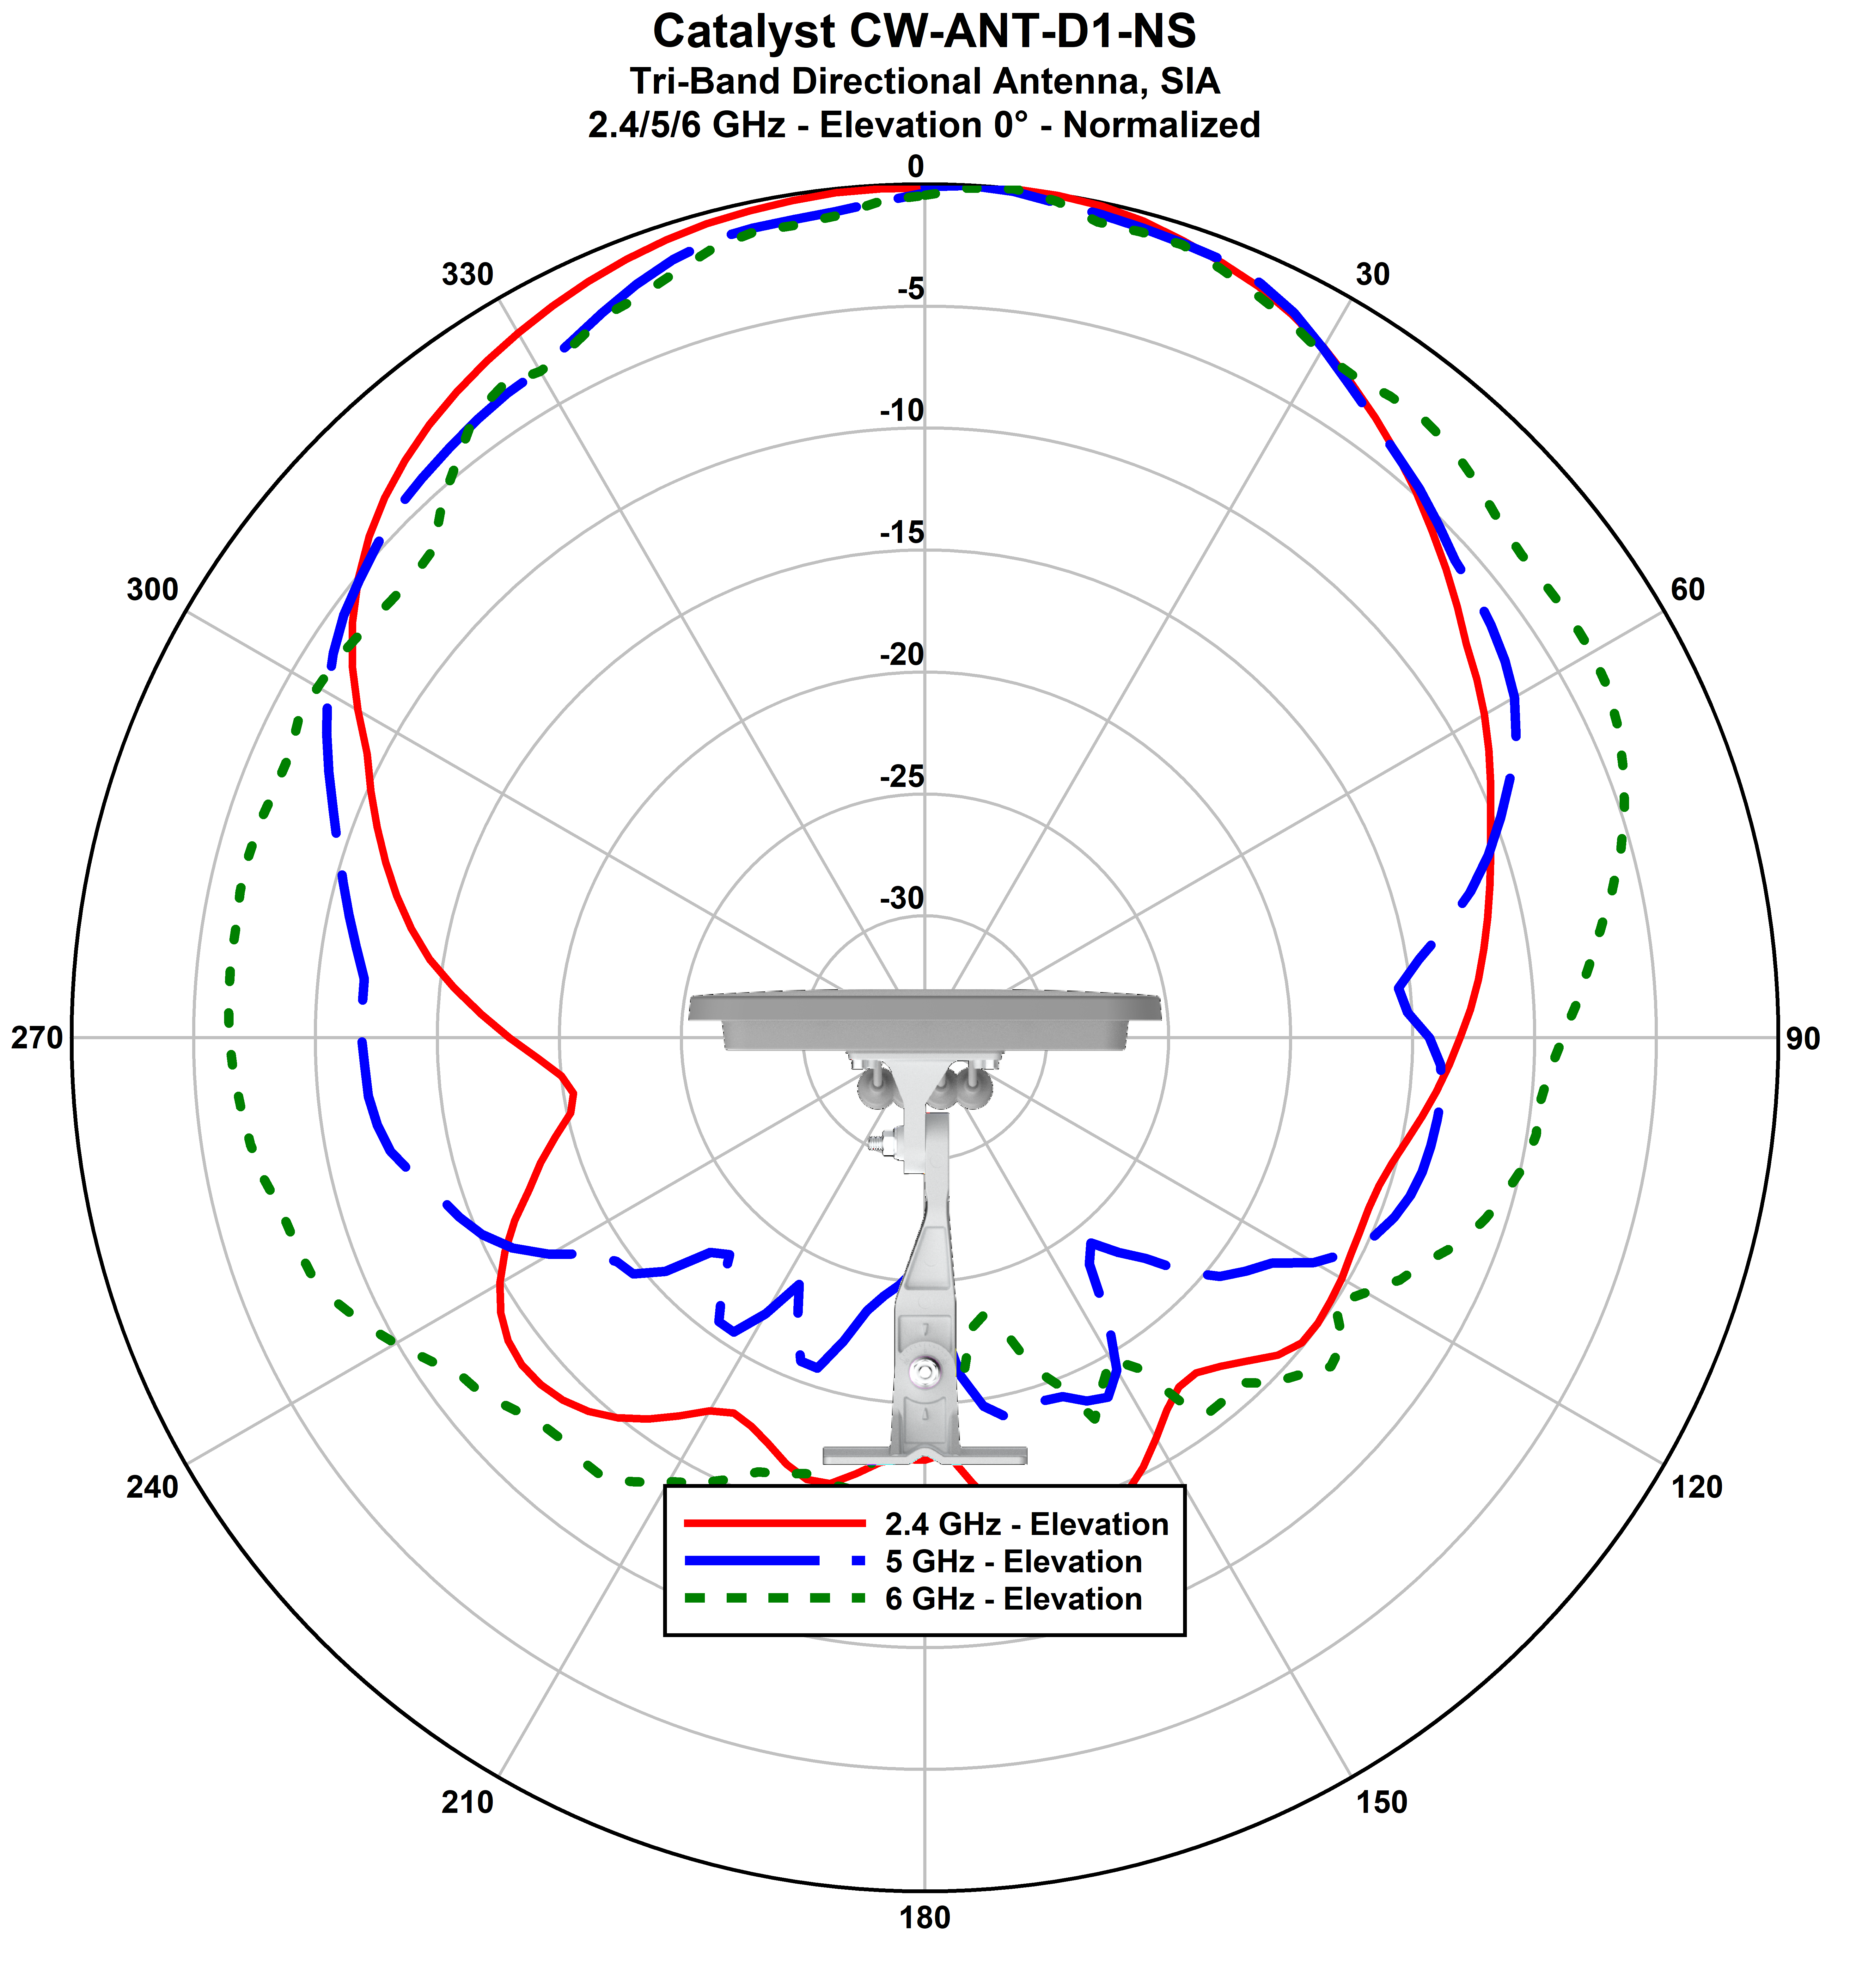 CW-ANT-D1-NS-00 elevation 0 chart.